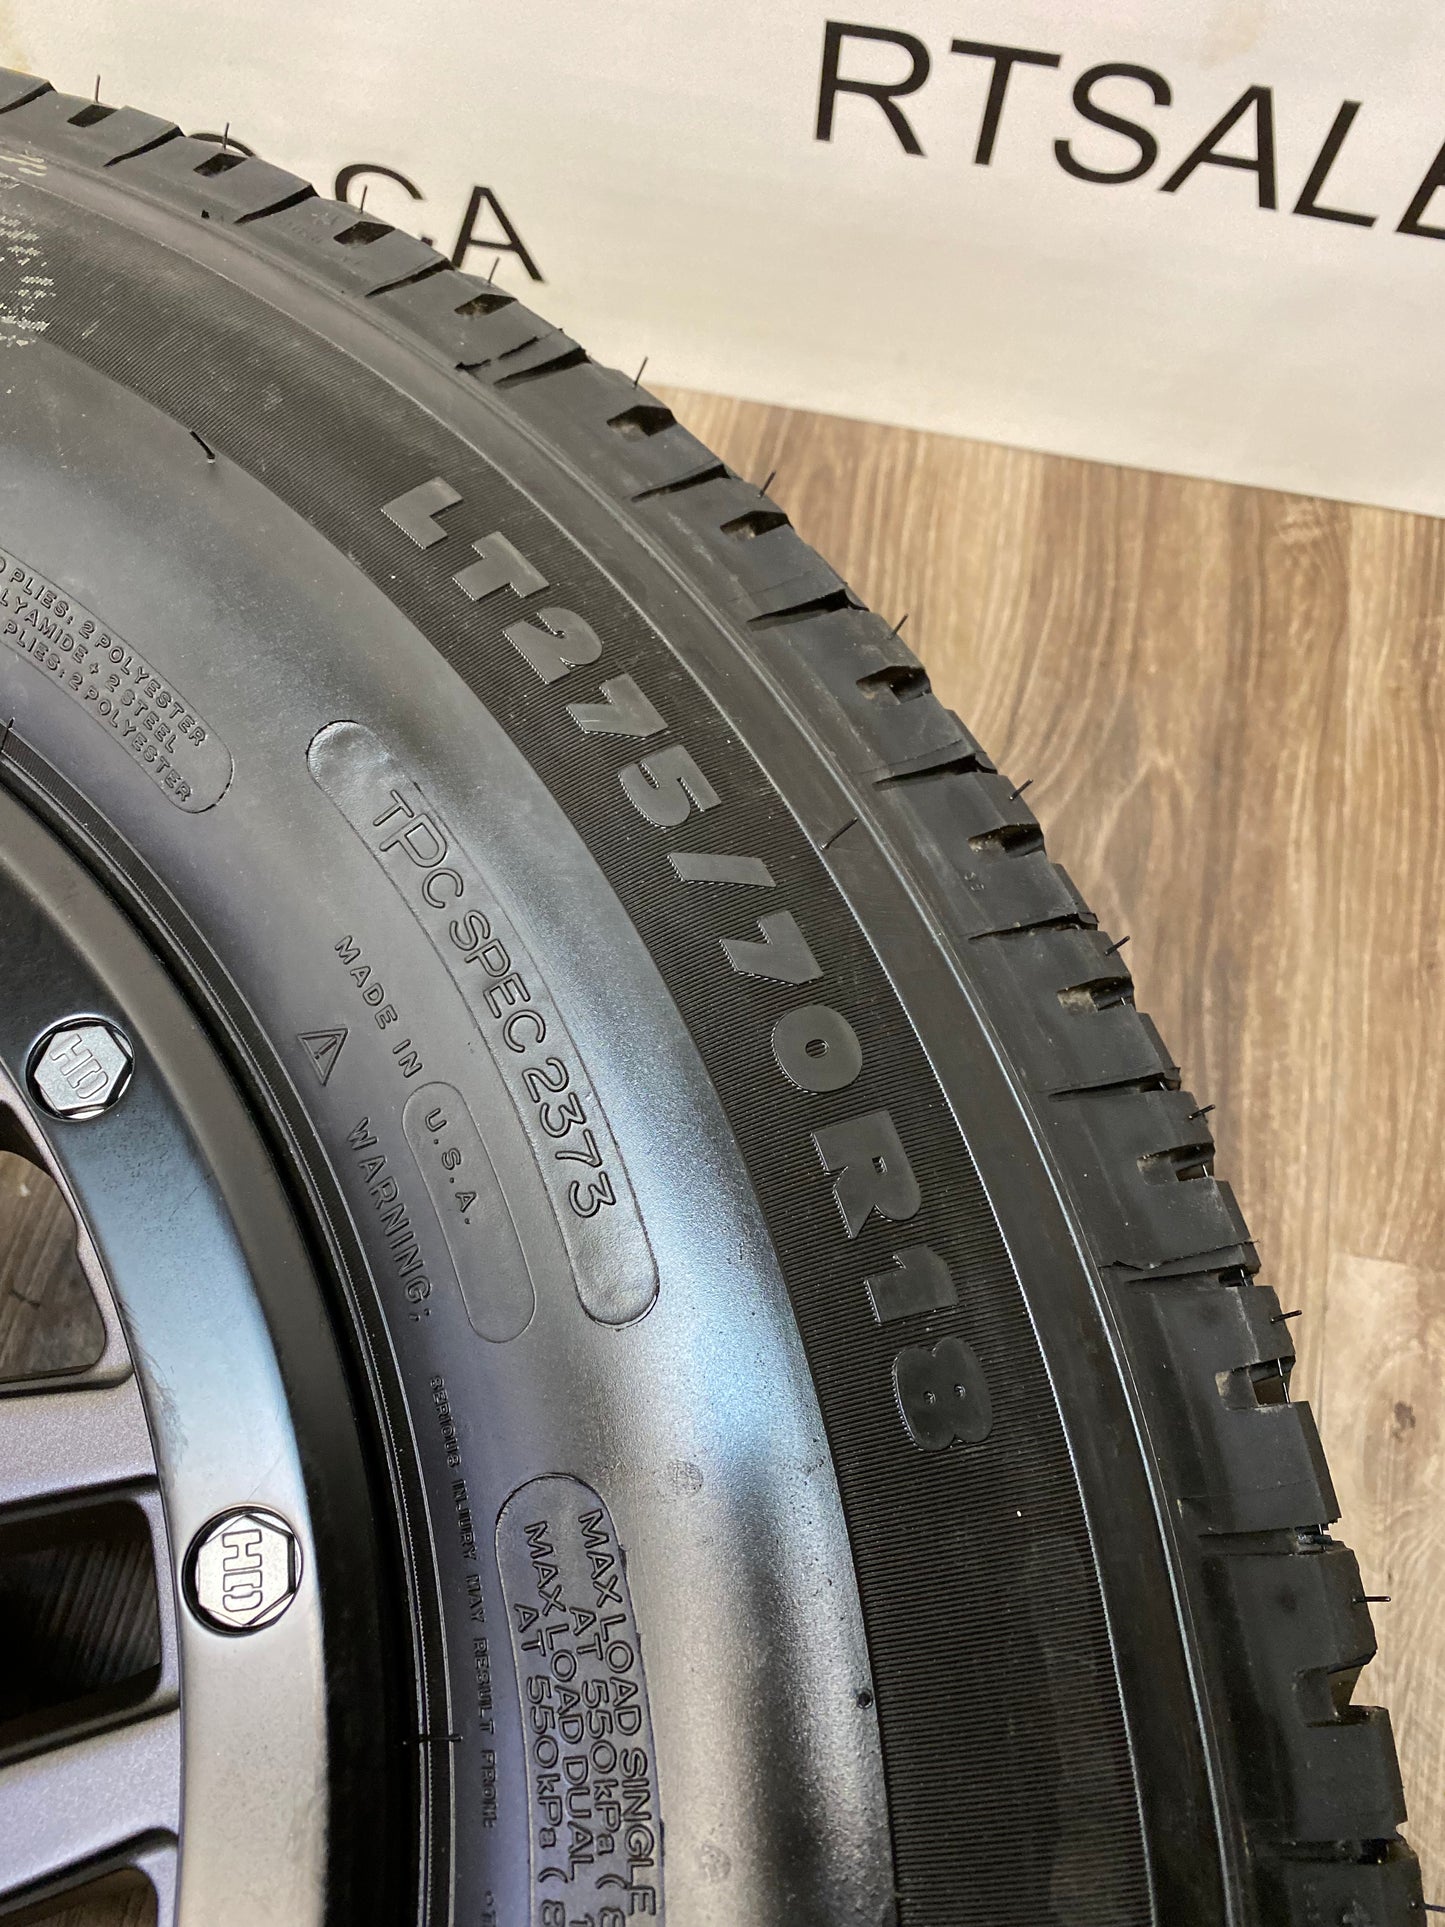 275/70/18 Michelin LTX tires Rims GMC Chevy 2500 3500